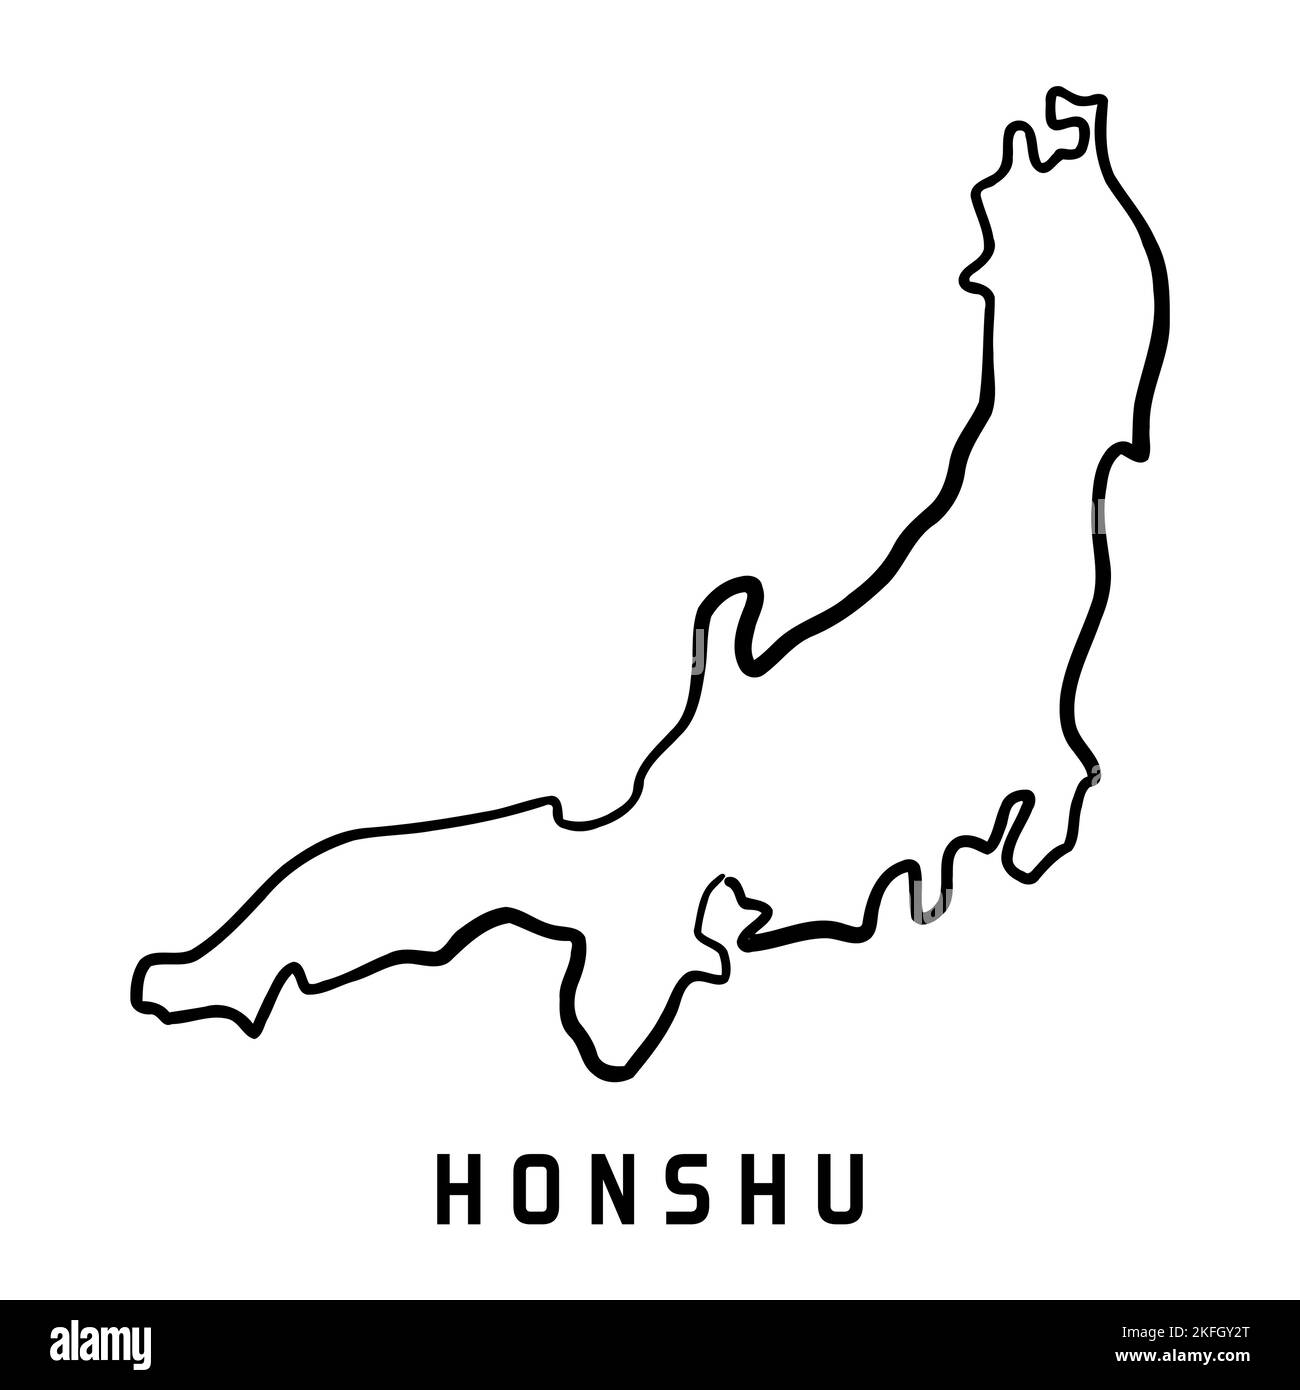 Honshu-Inselkarte in Japan. Einfache Umrisse. Vektorgrafik handgezeichnete Karte im vereinfachten Stil. Stock Vektor